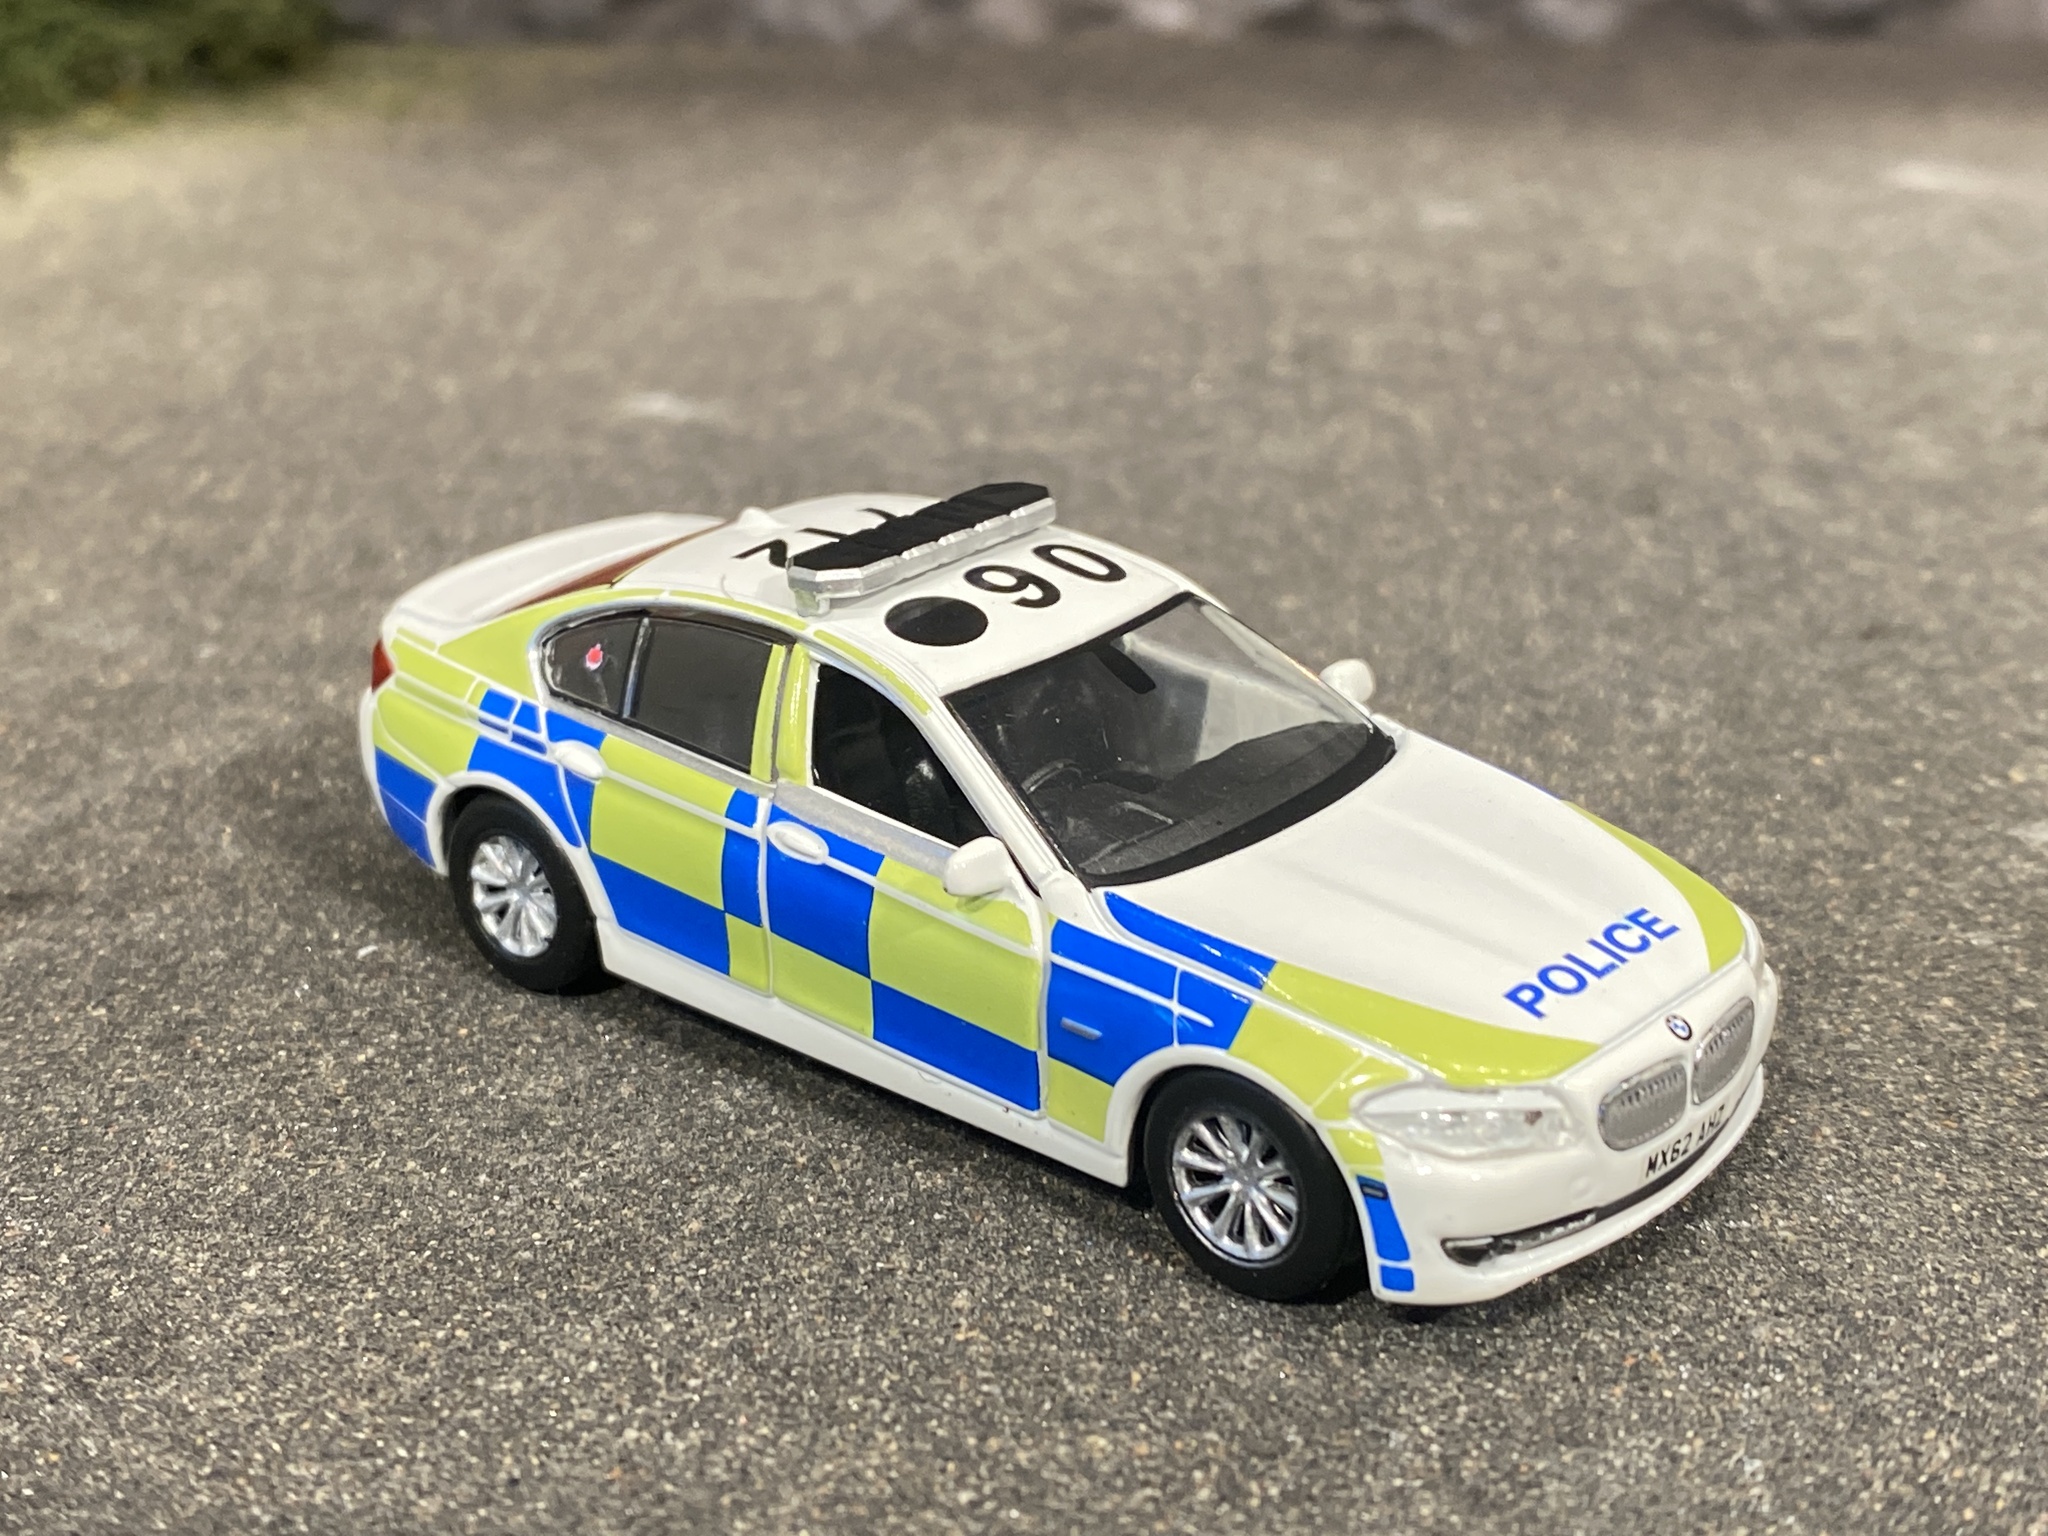 Skala 1/64 - BMW 5 Series F10 Greater Manchester Police fr Tiny - Fotoexemplar